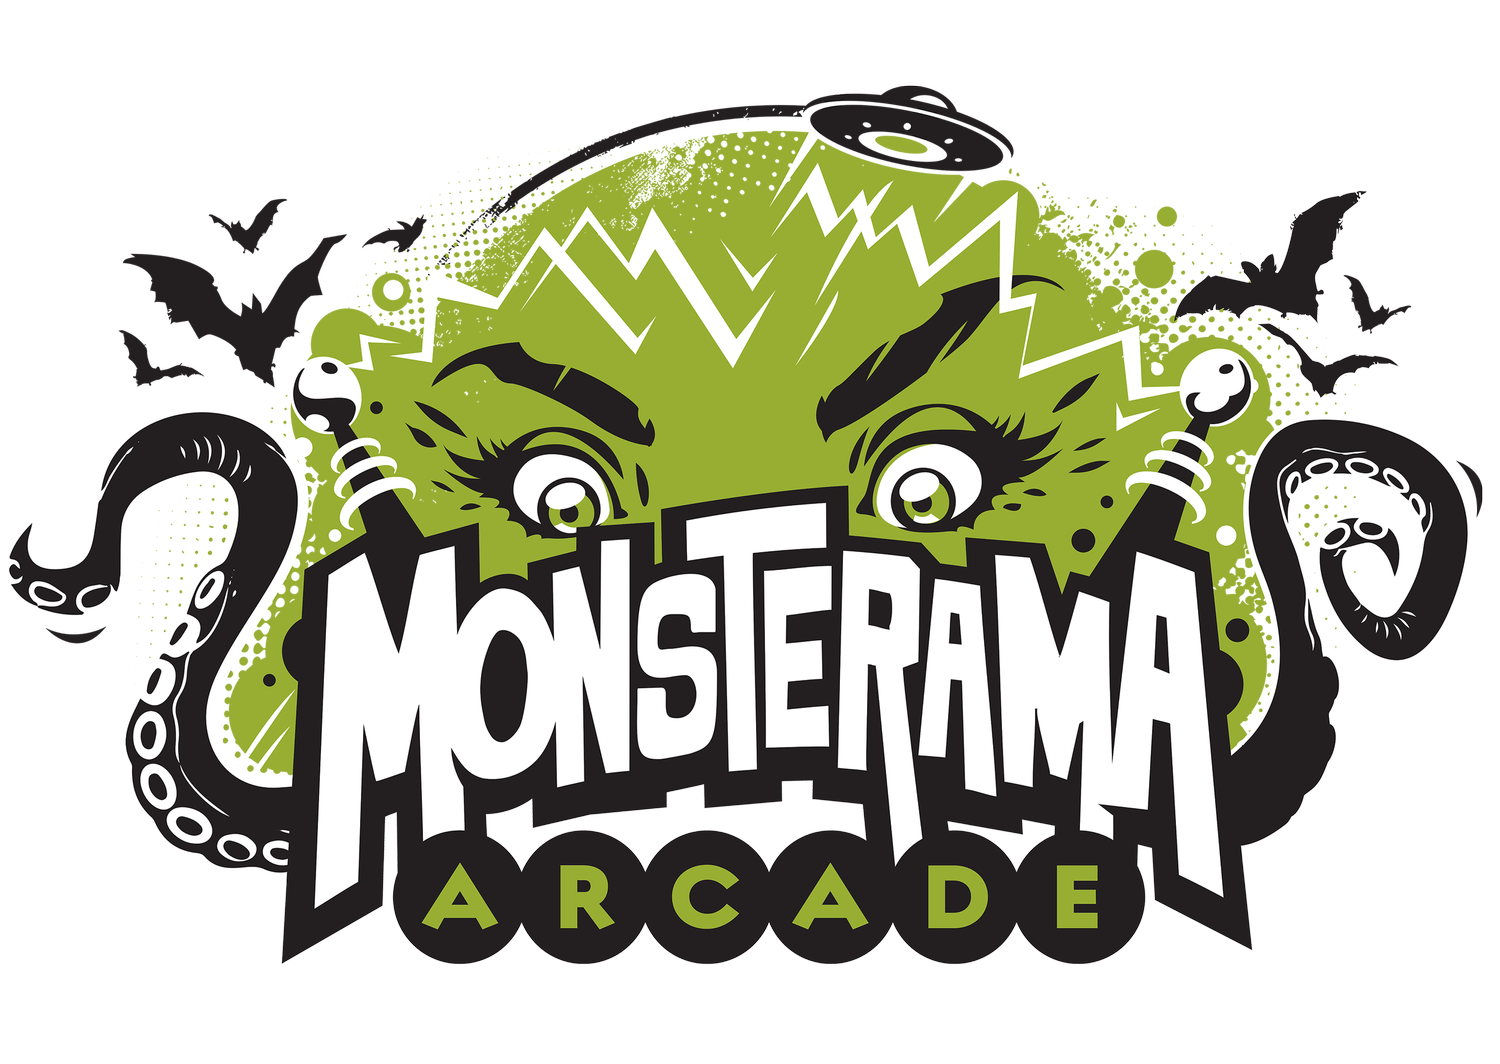 Monsterama Arcade